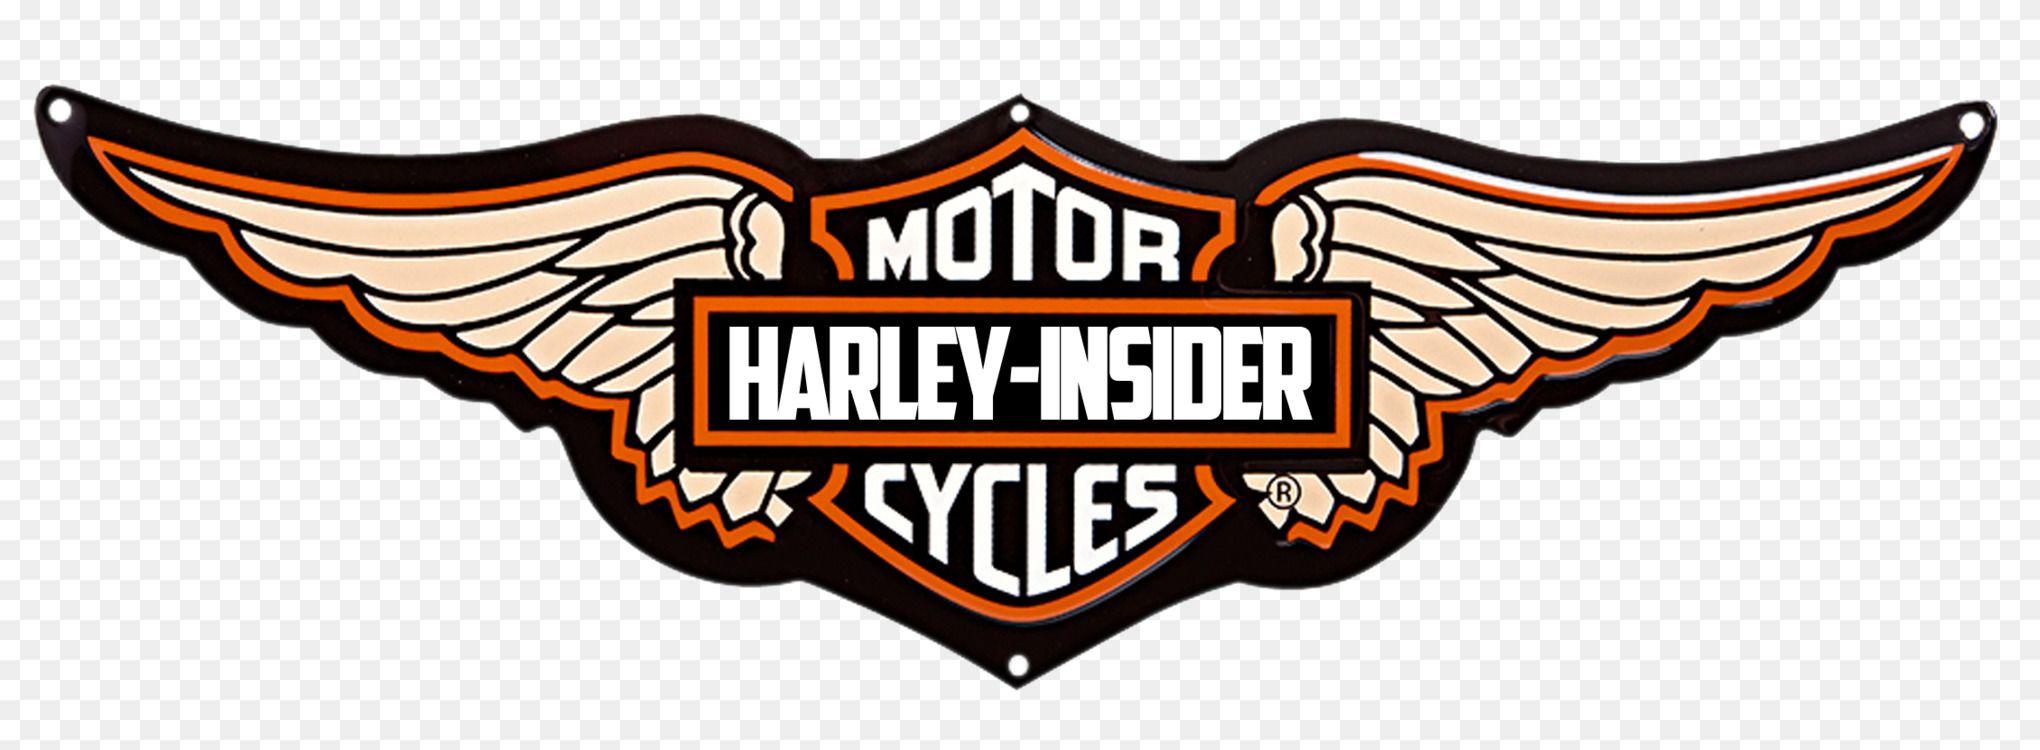 Harley-Davidson Logo - Harley-Davidson Sportster Motorcycle Logo Free PNG Image - Harley ...